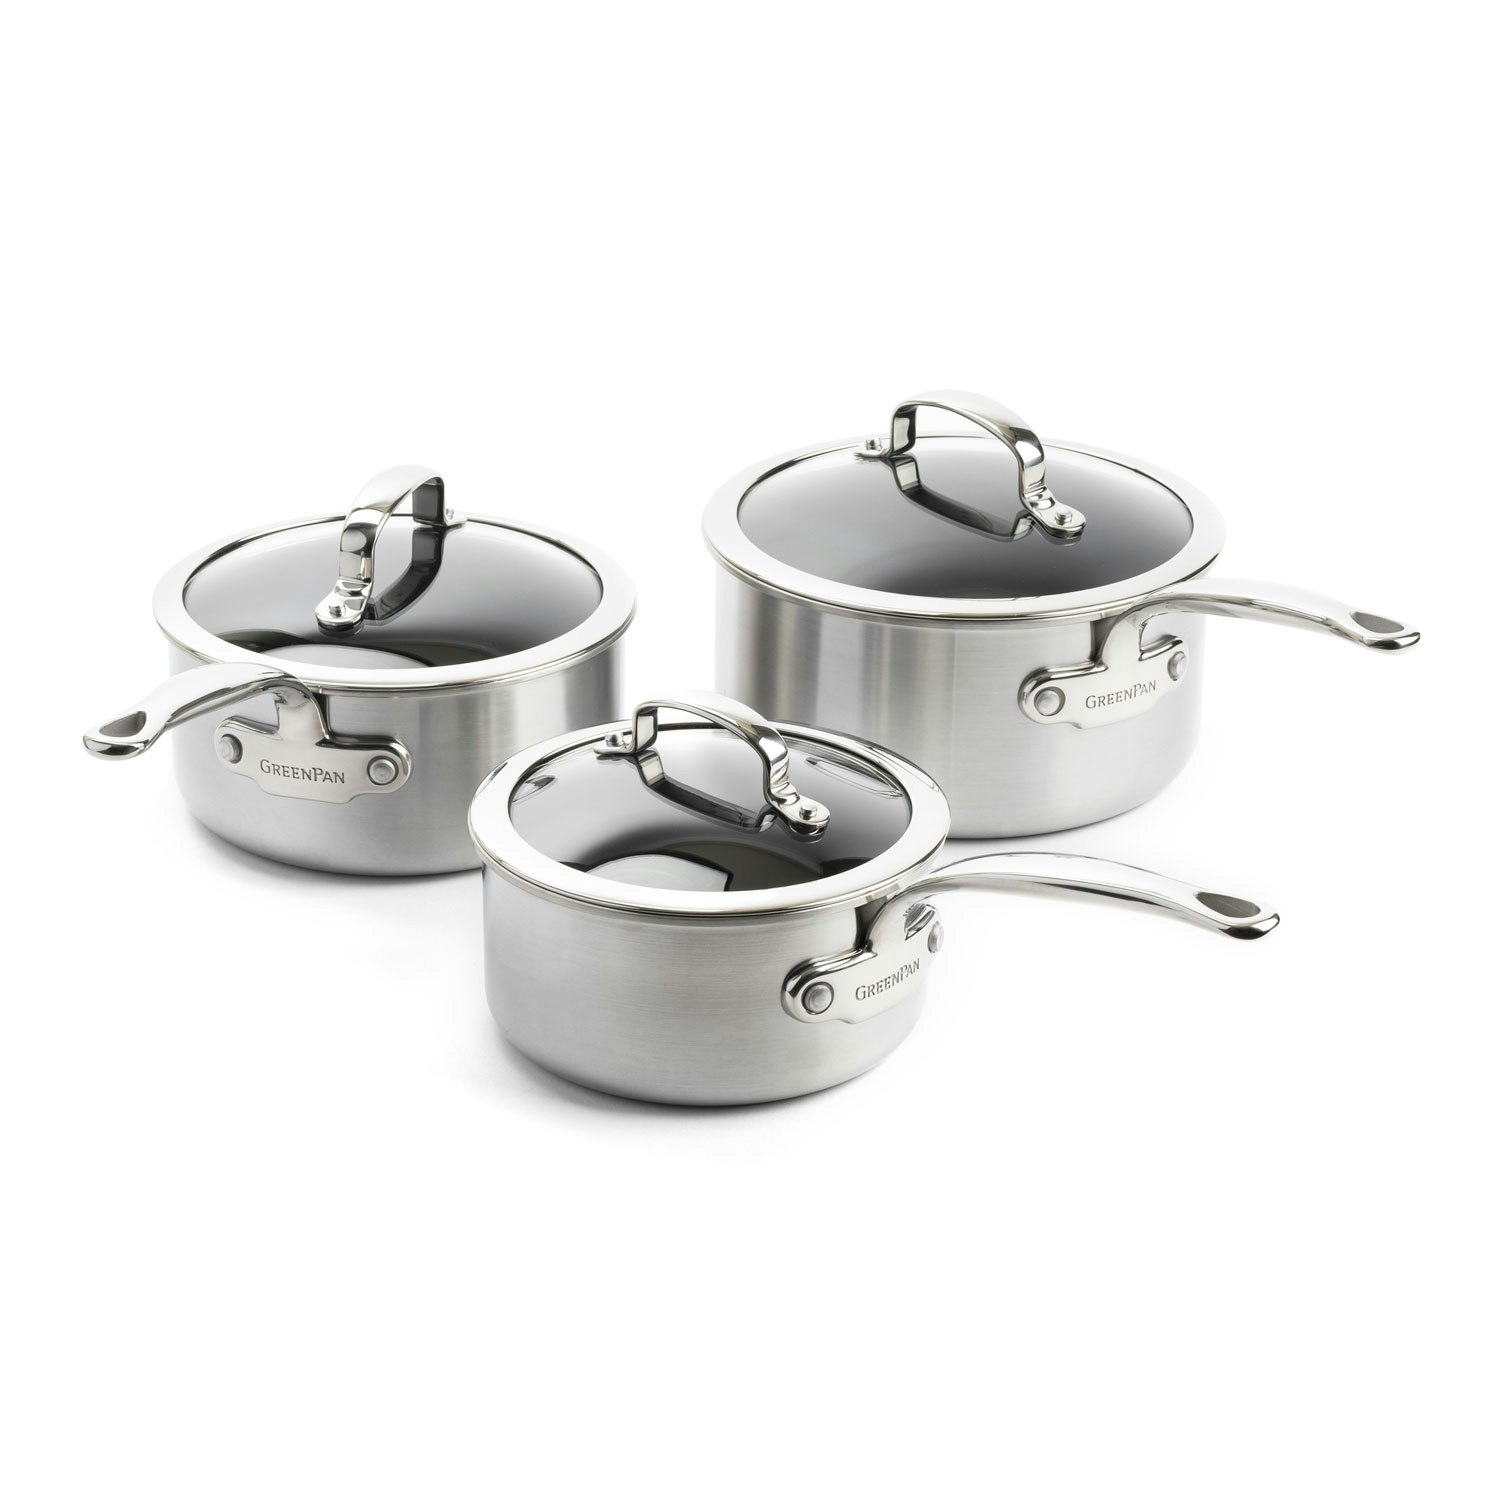 https://royaldesign.com/image/2/greenpan-premiere-saucepan-set-3-pieces-0